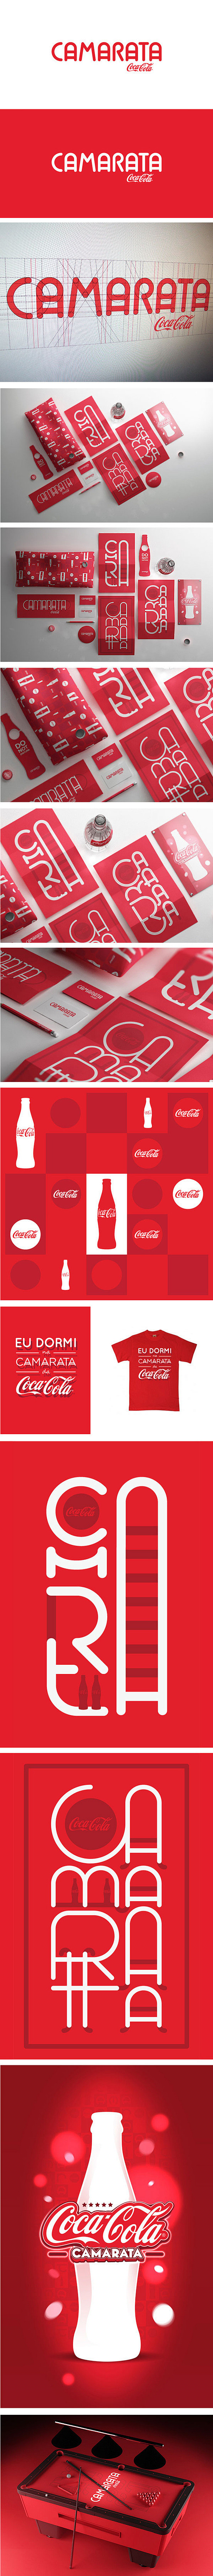 Camarata Coca-Cola -...